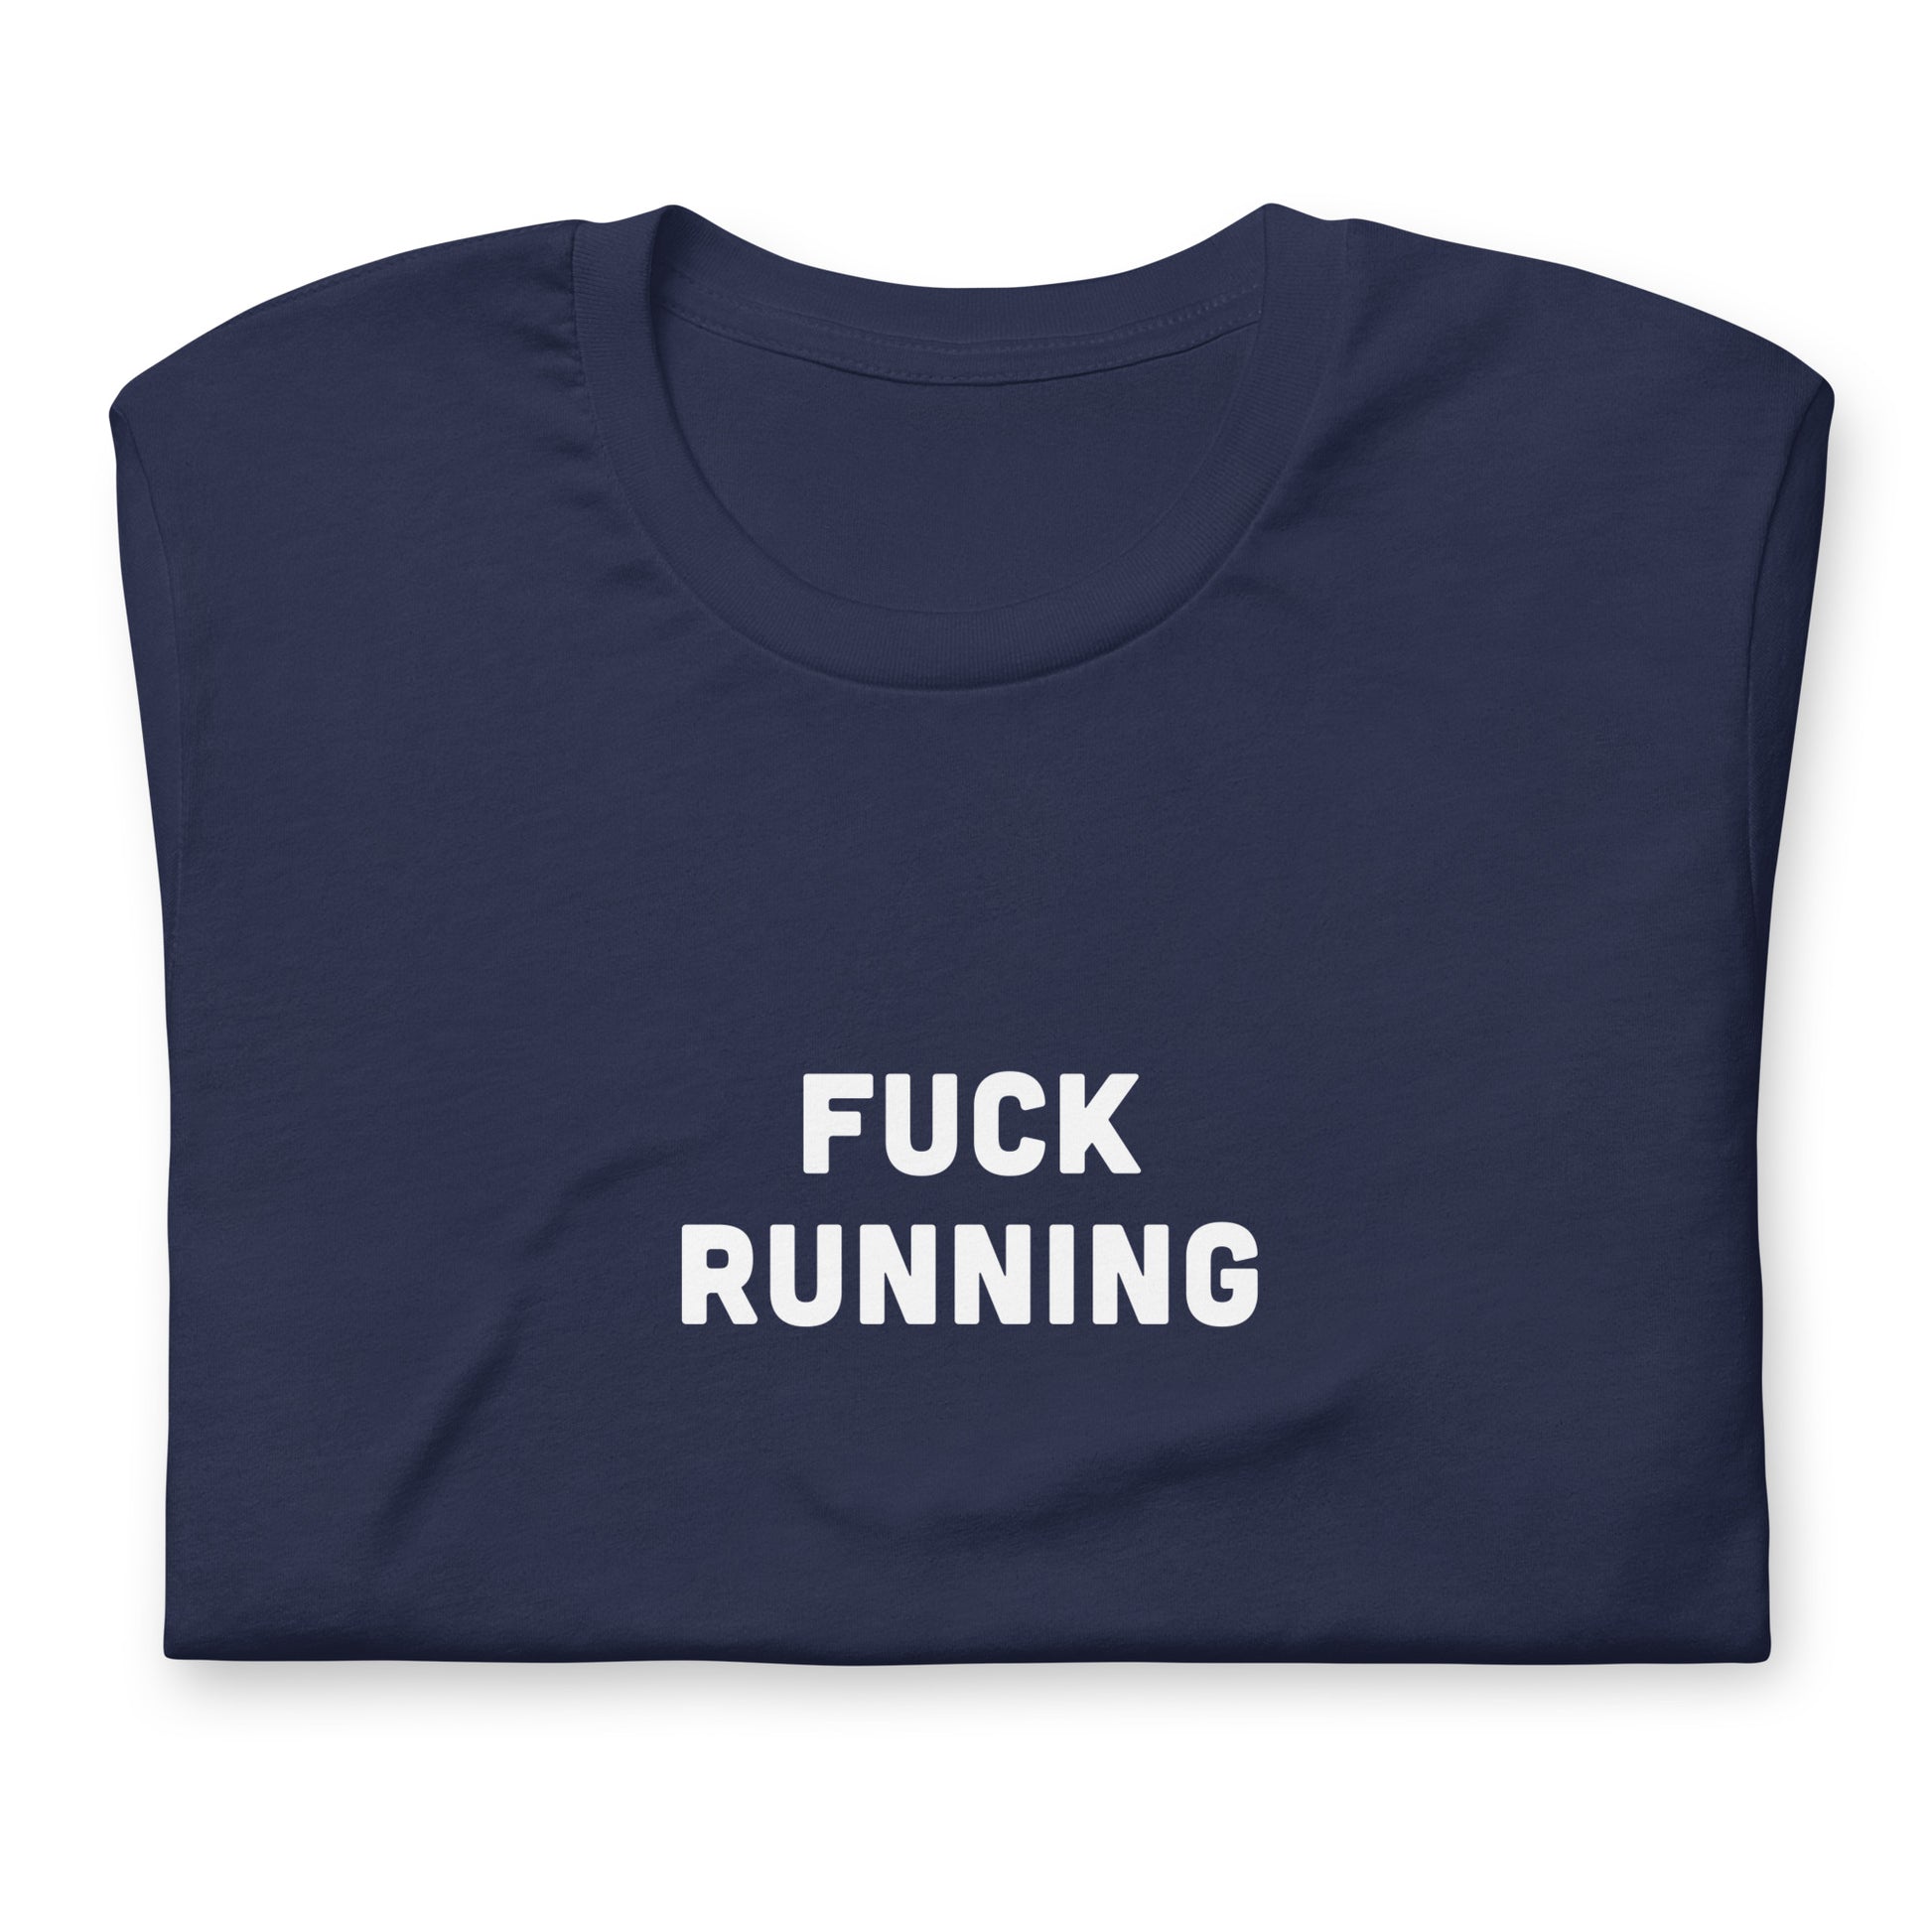 Fuck Running T-Shirt Size L Color Black